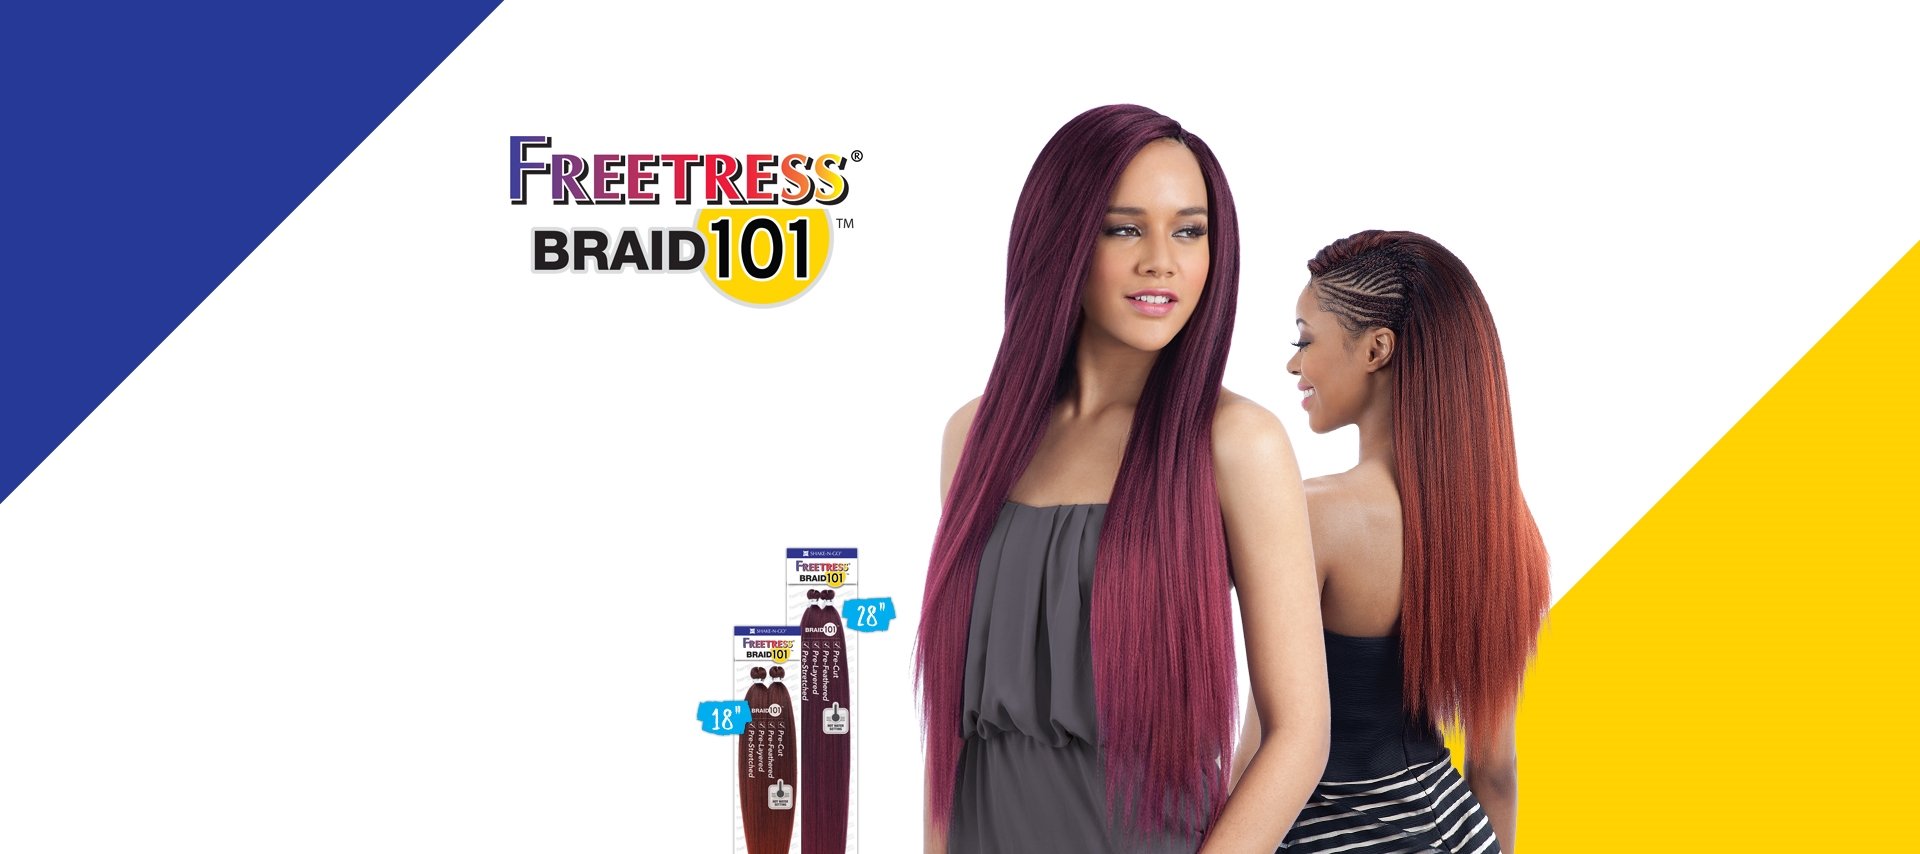 FREETRESS braid 2x BRAID 101 